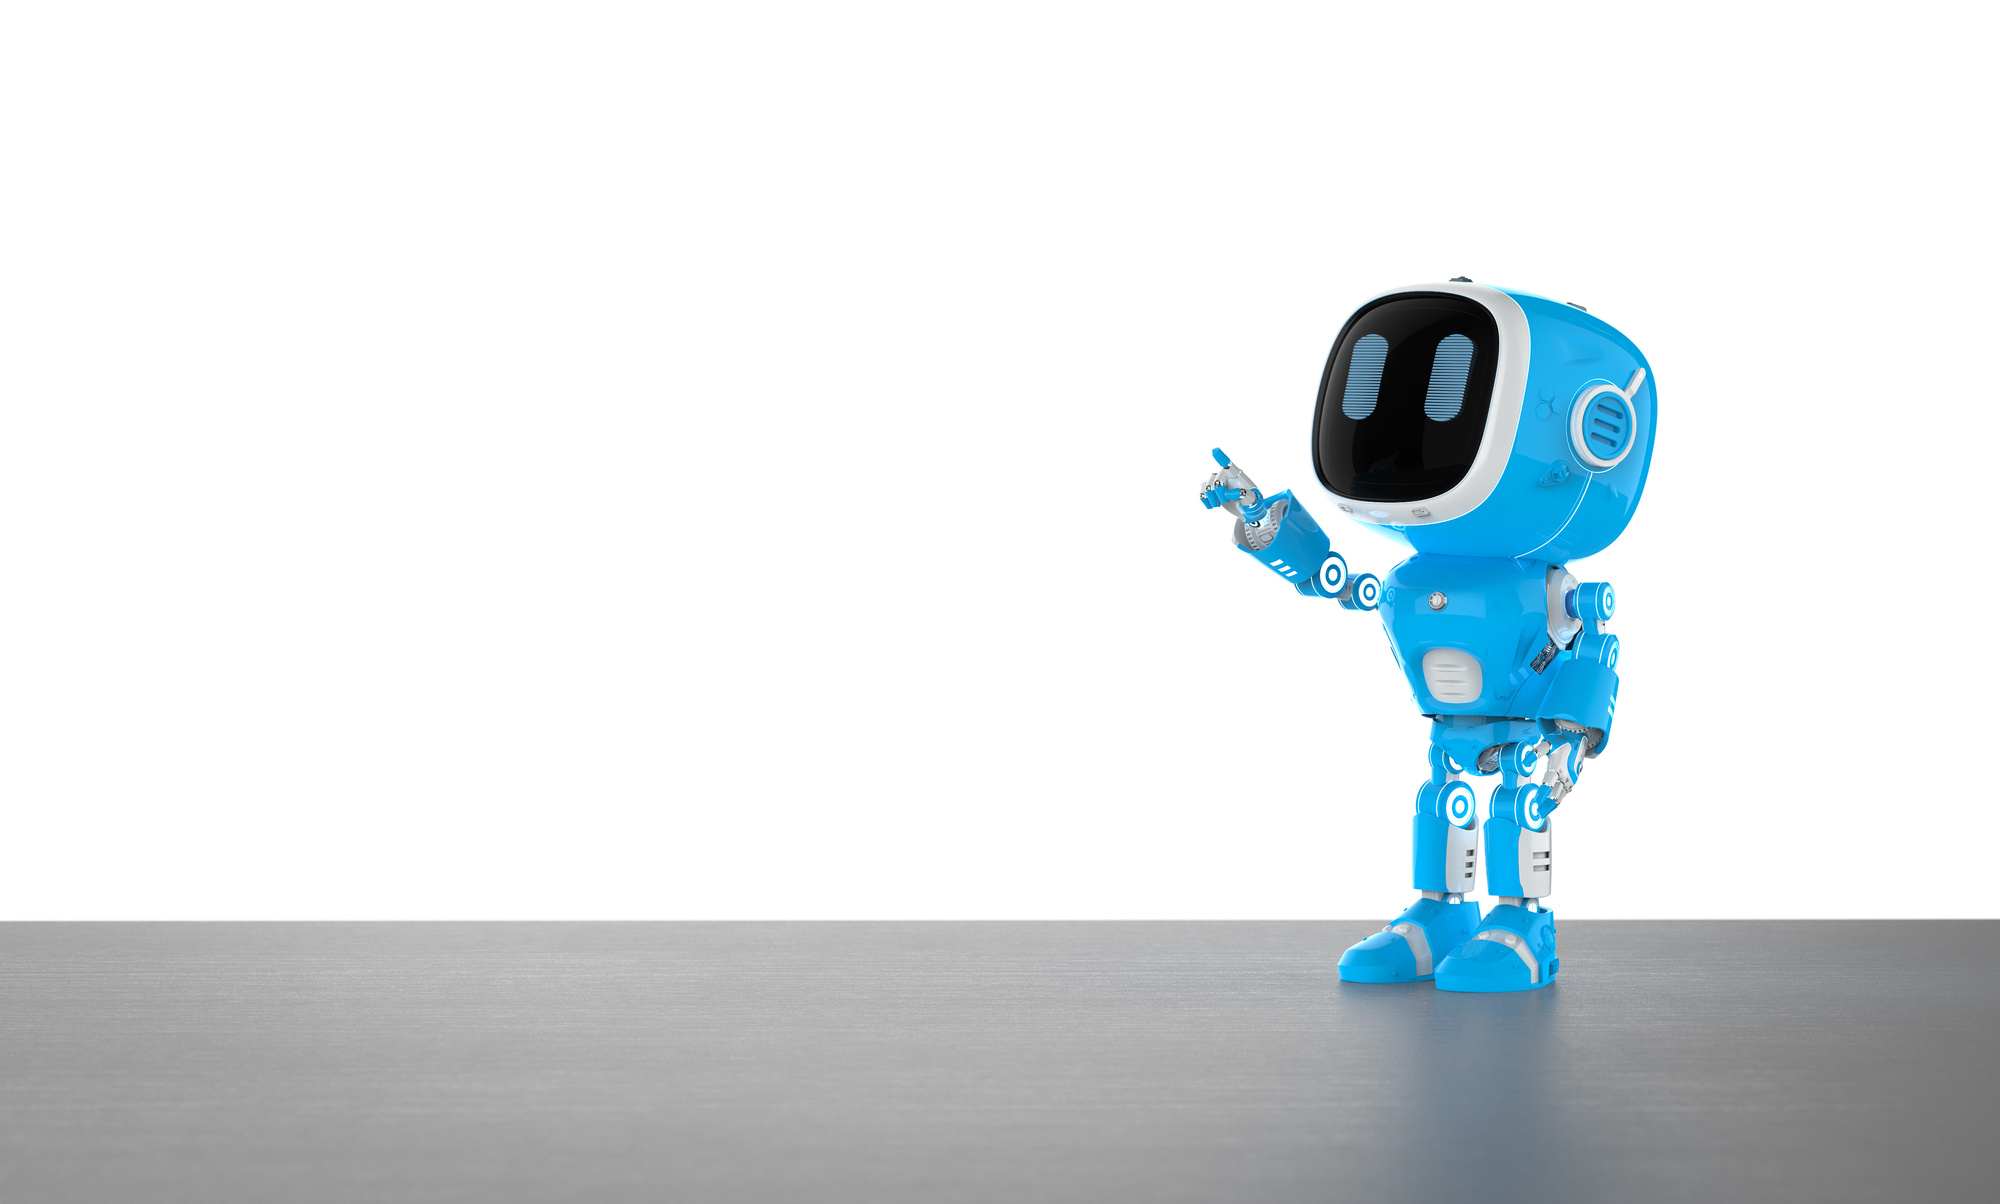 Blue robotic assistant or artificial intelligence robot finger p